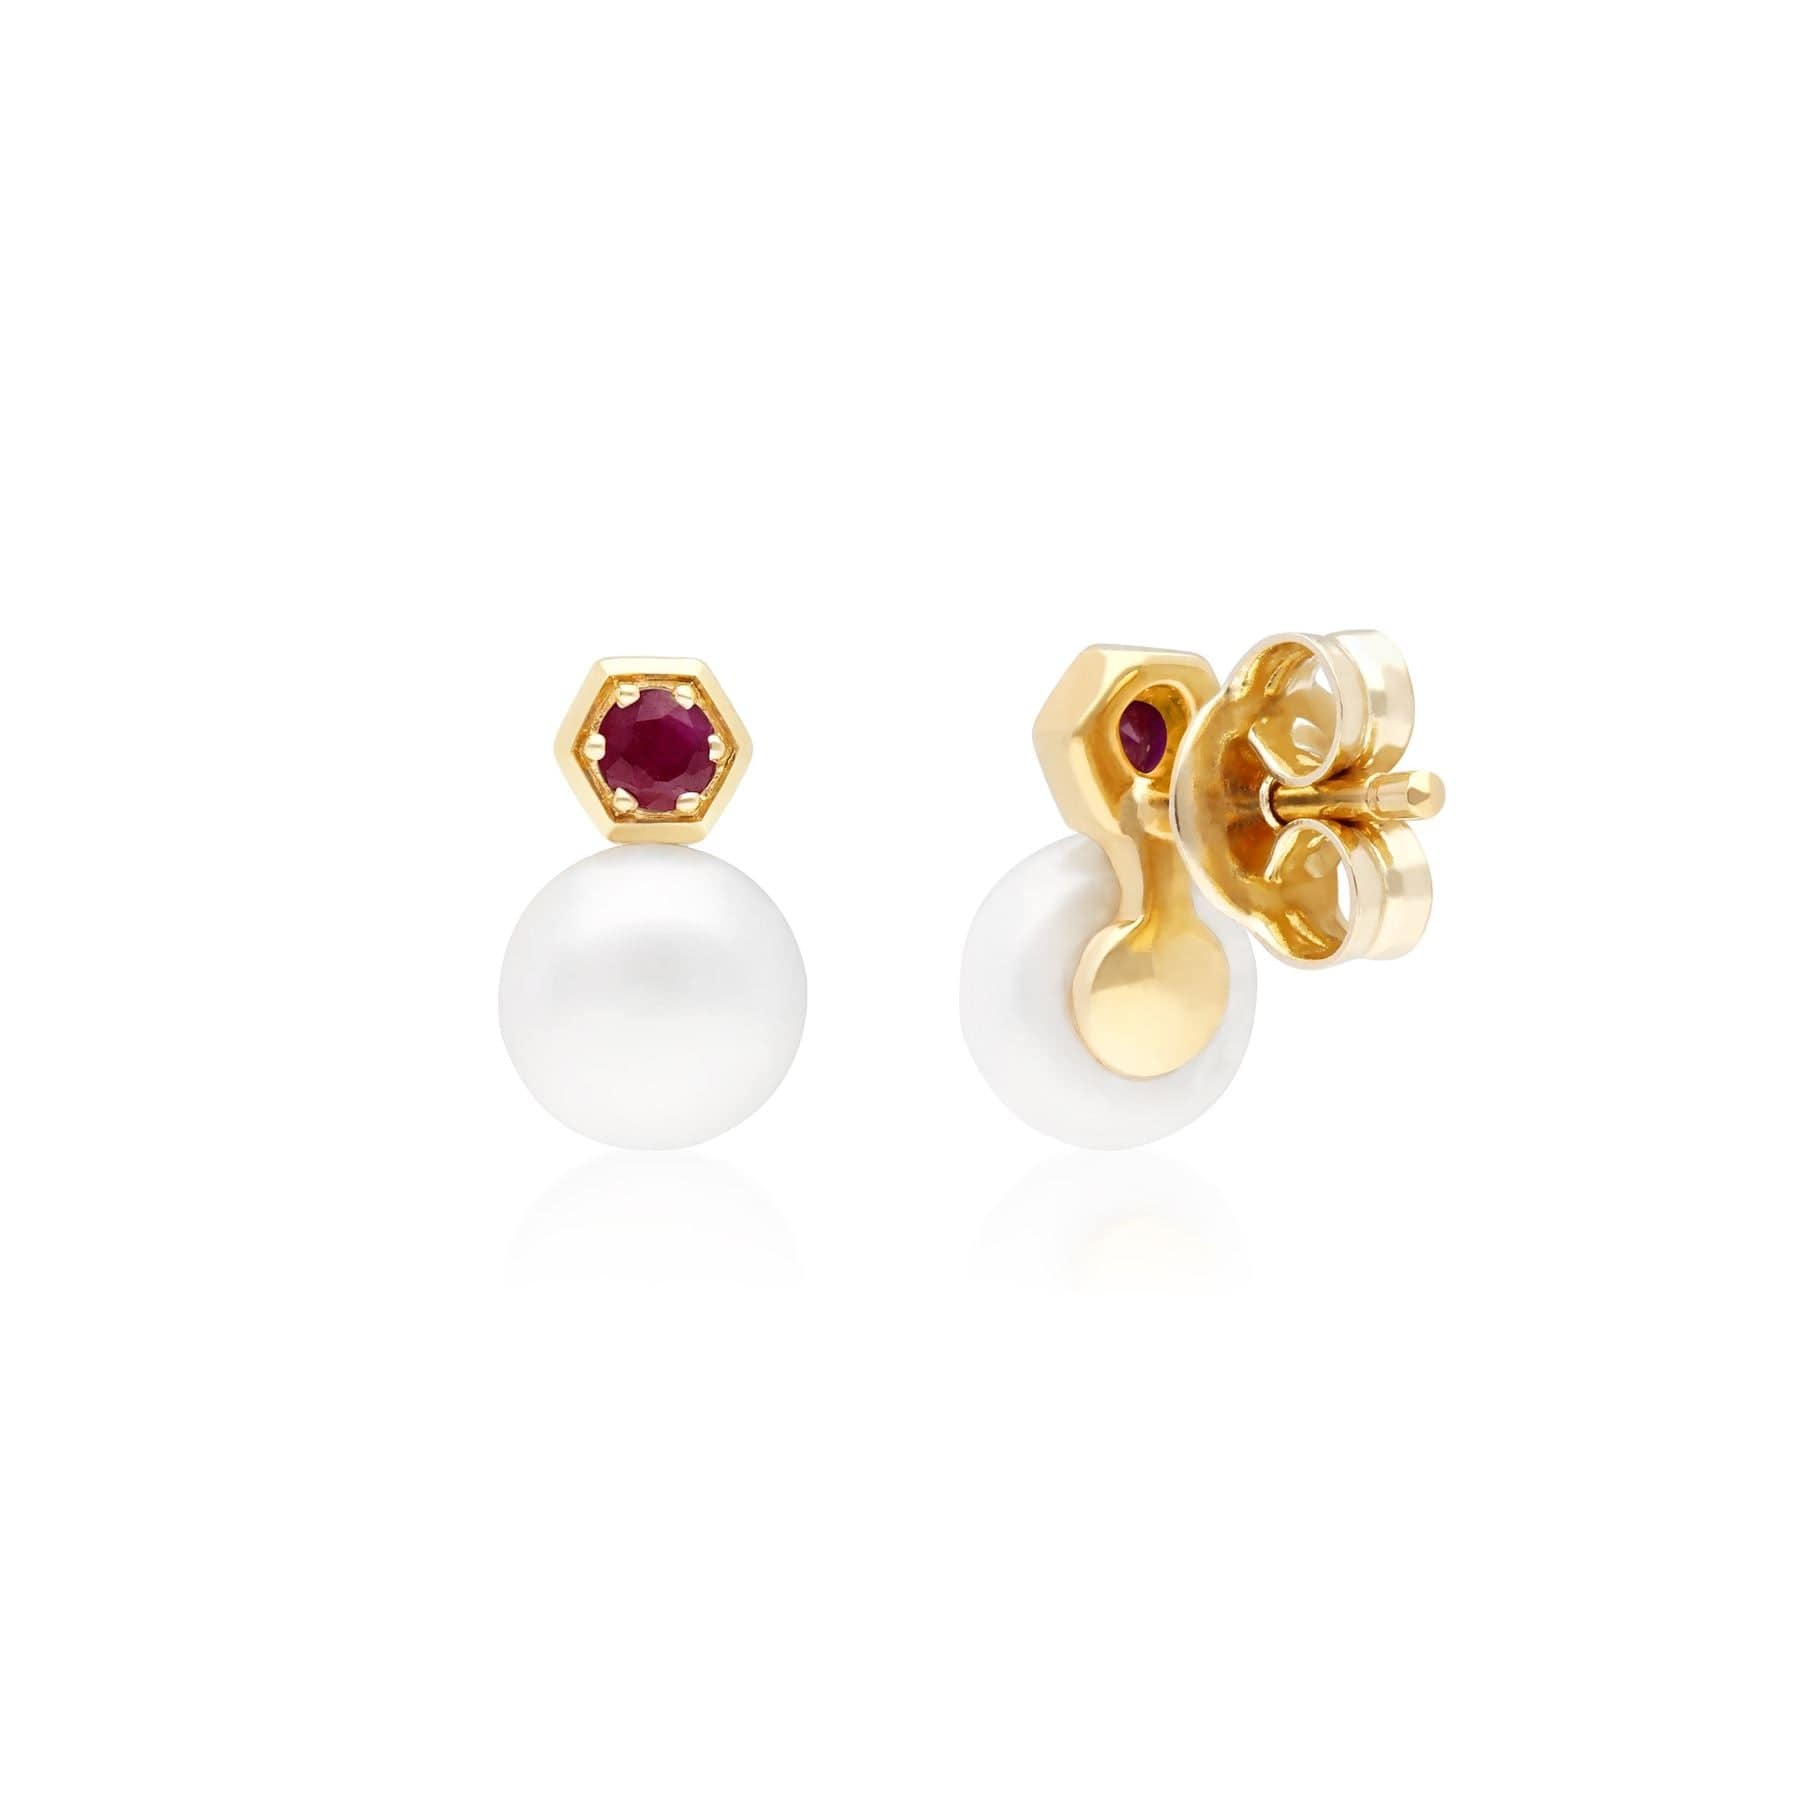 Modern Pearl & Ruby Stud Earrings in 9ct Yellow Gold